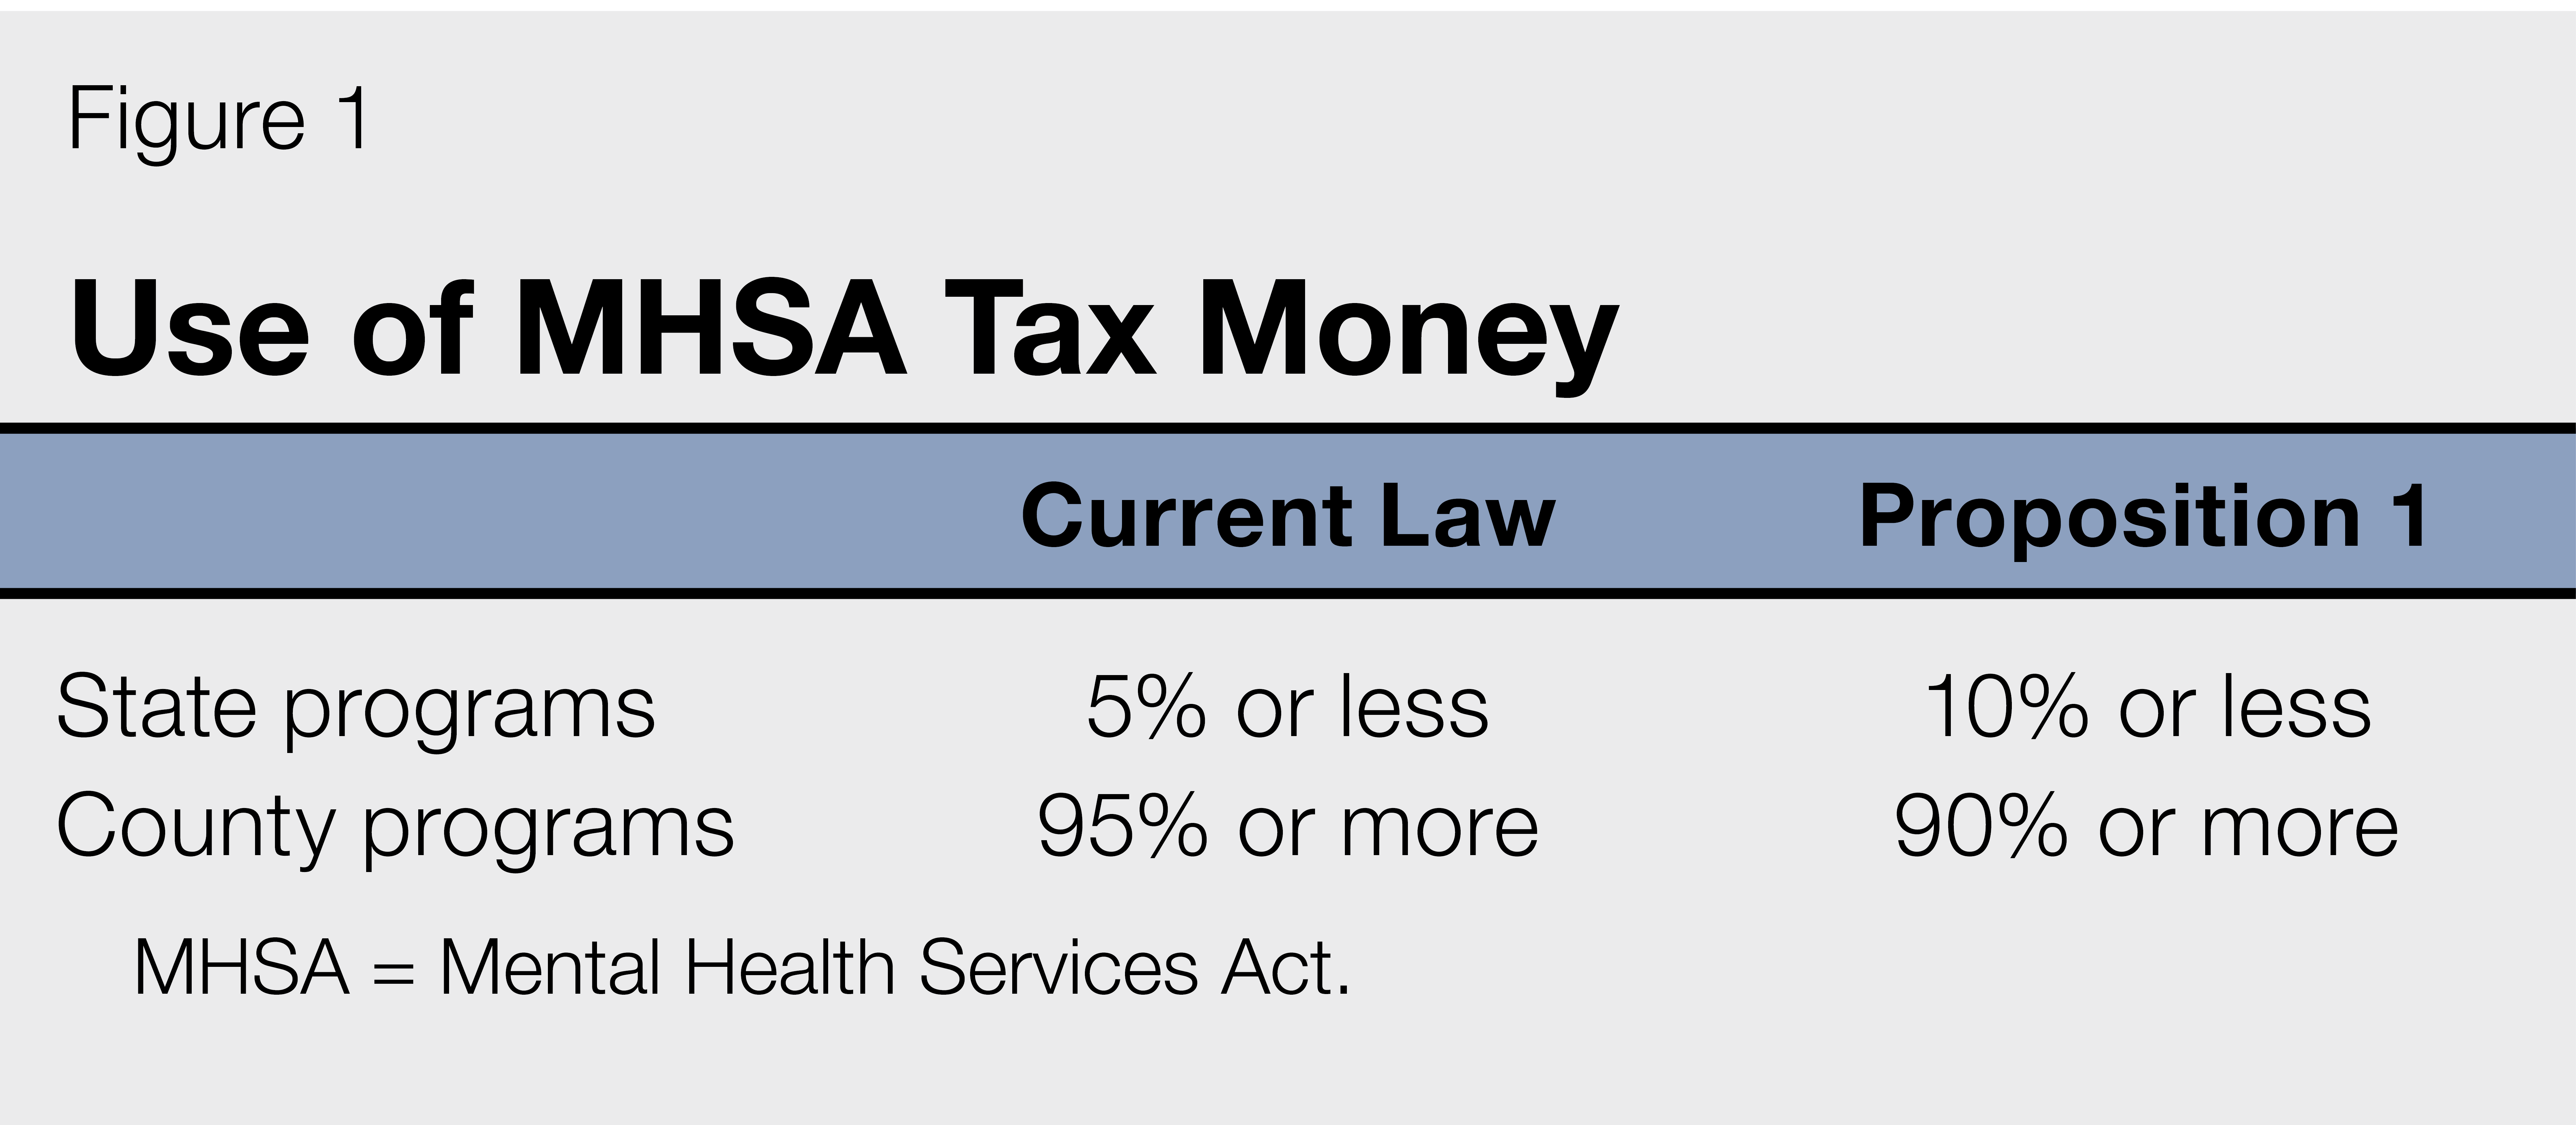 Figure 1 - Use of MHSA Tax Money